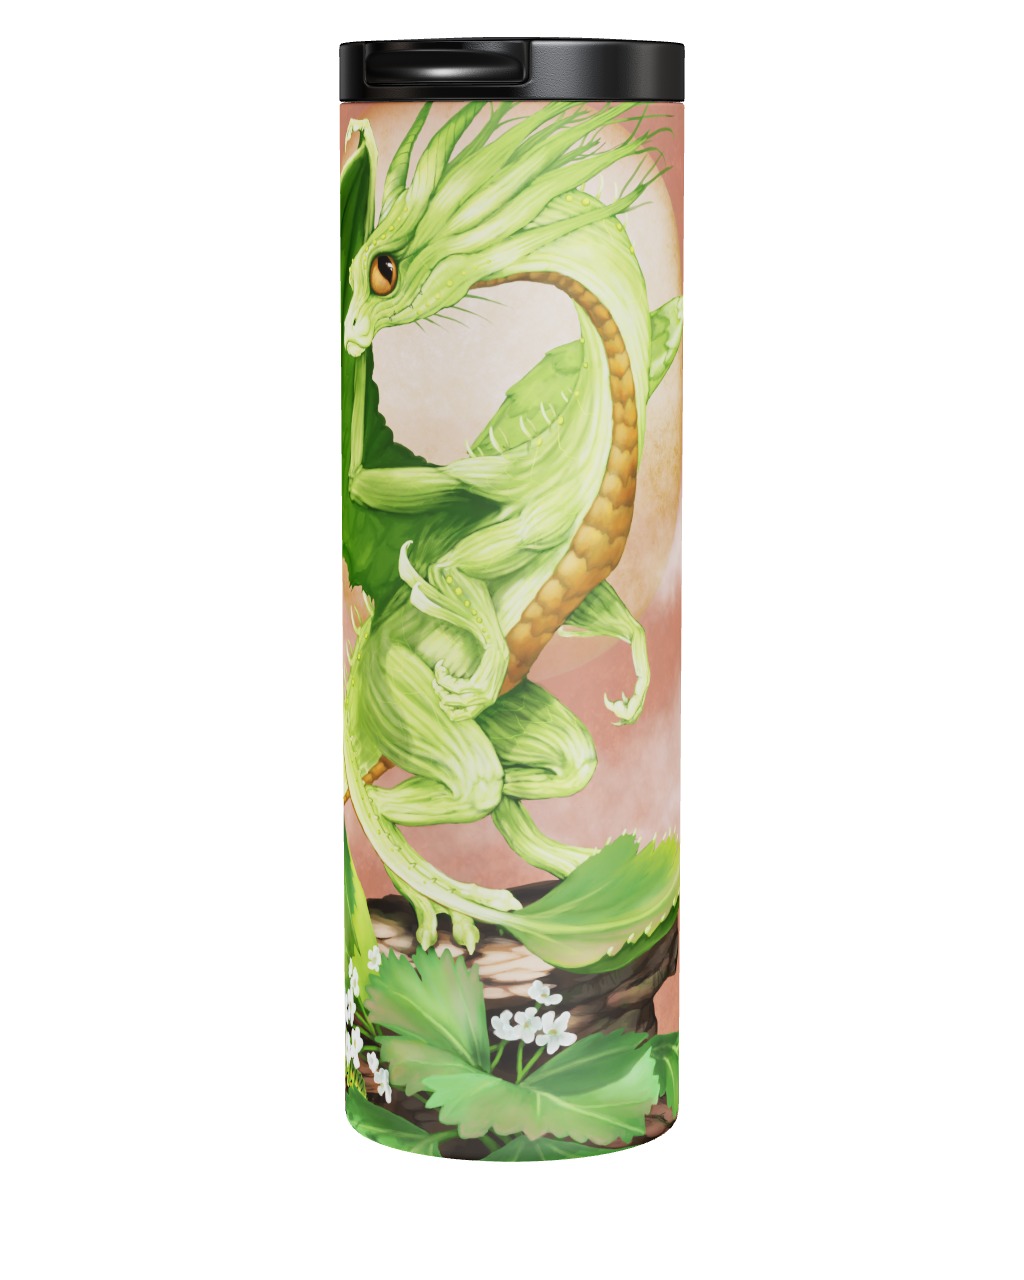 Celery Dragon Tumbler